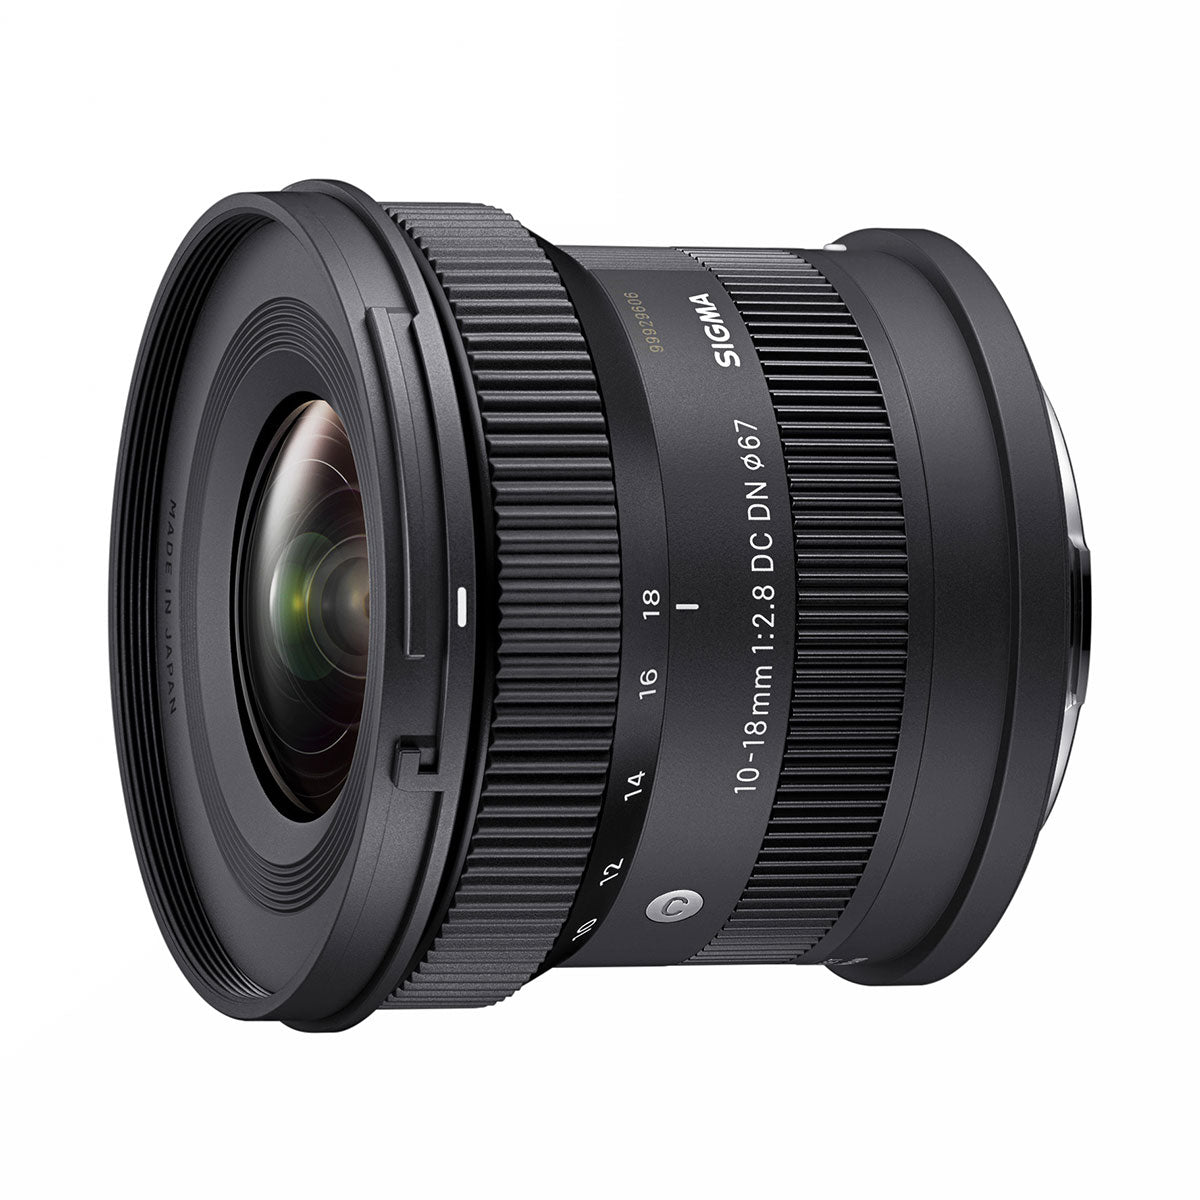 Sigma 10-18mm f/2.8 DC DN Contemporary Lens for Leica / Panasonic L-Mount (APS-C)